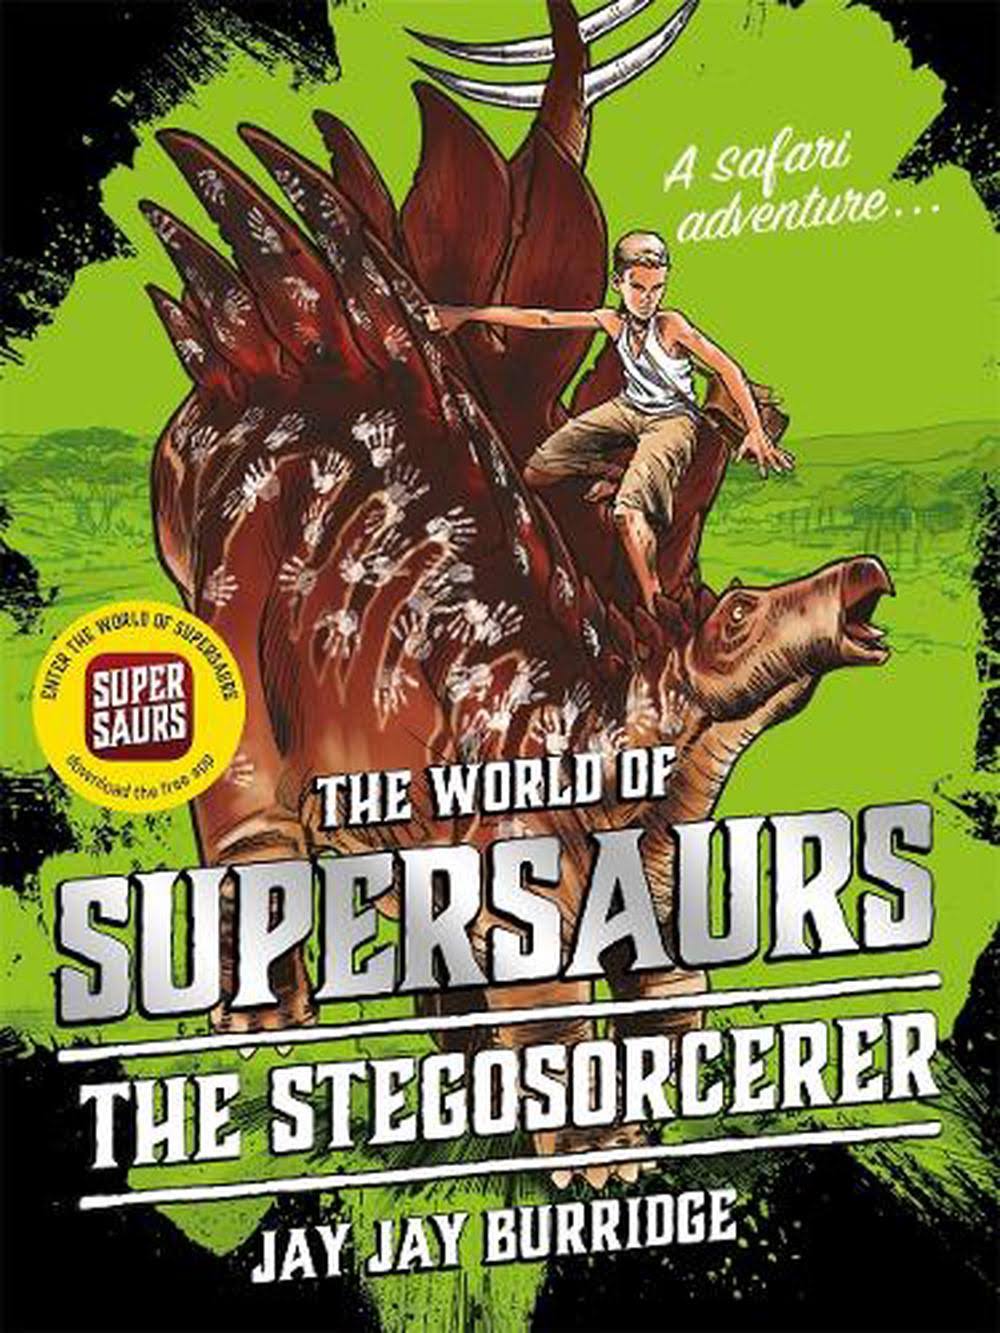 Supersaurs 2 The Stegosorcerer by Jay Jay Burridge